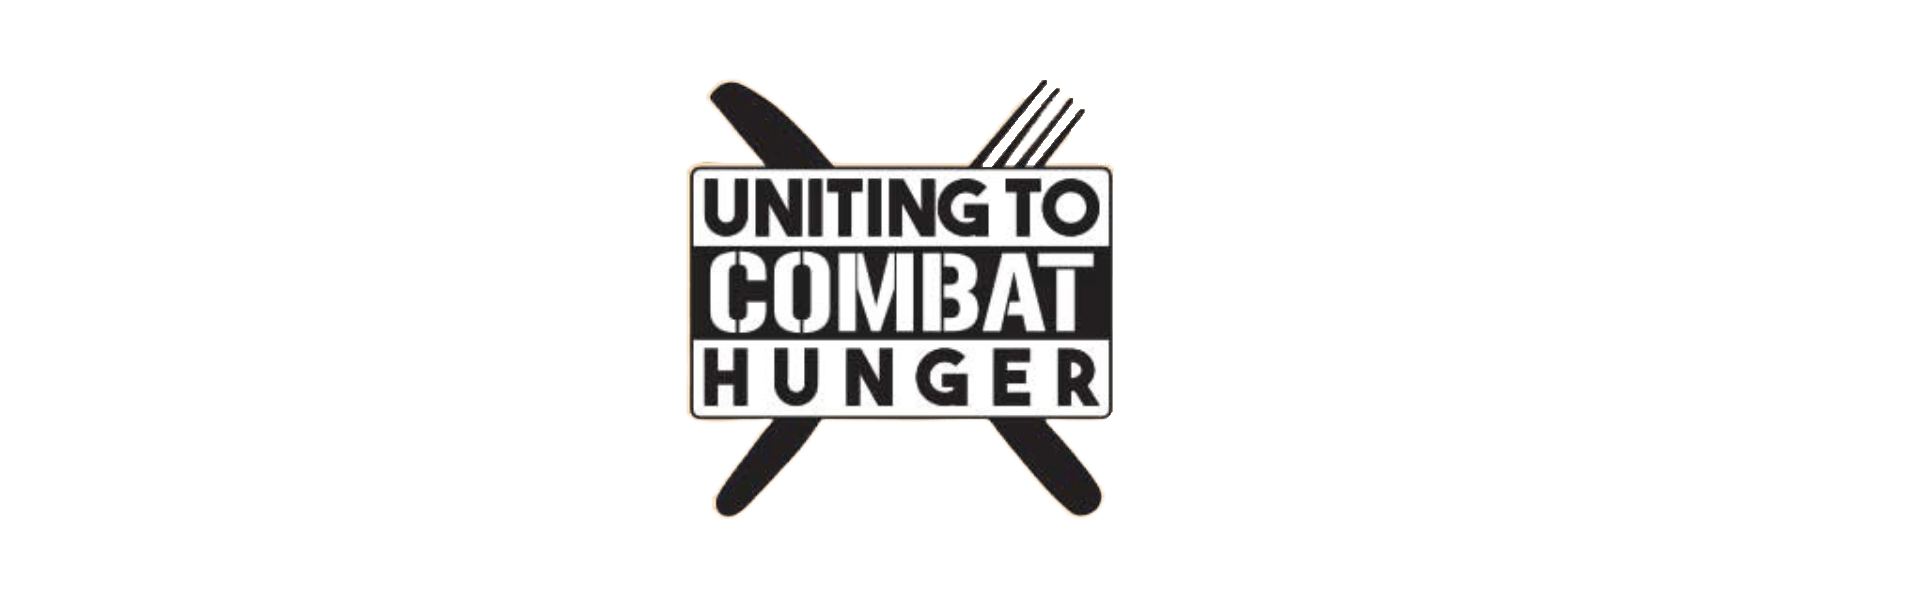 Uniting to Combat Hunger logo